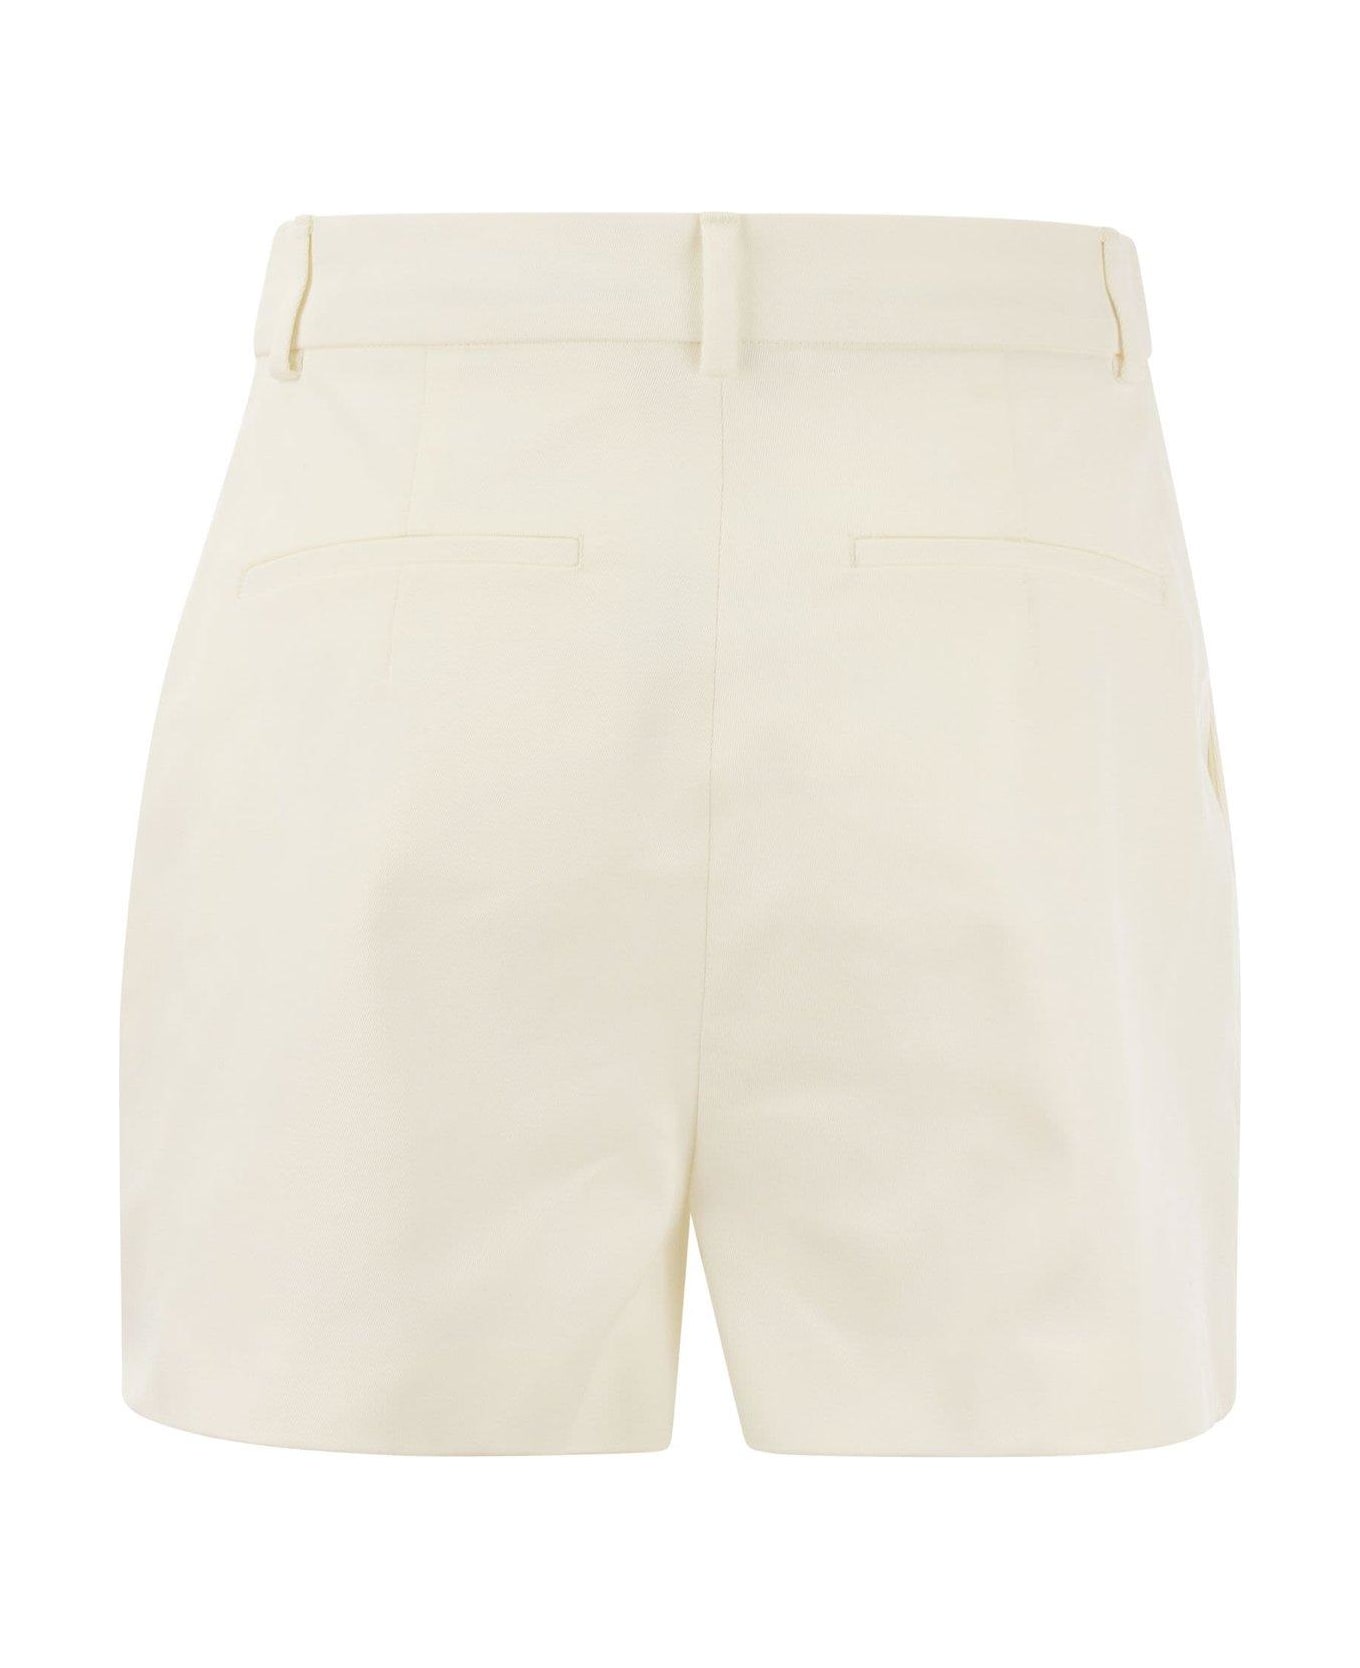 SportMax Unico Washed Shorts - White ショートパンツ